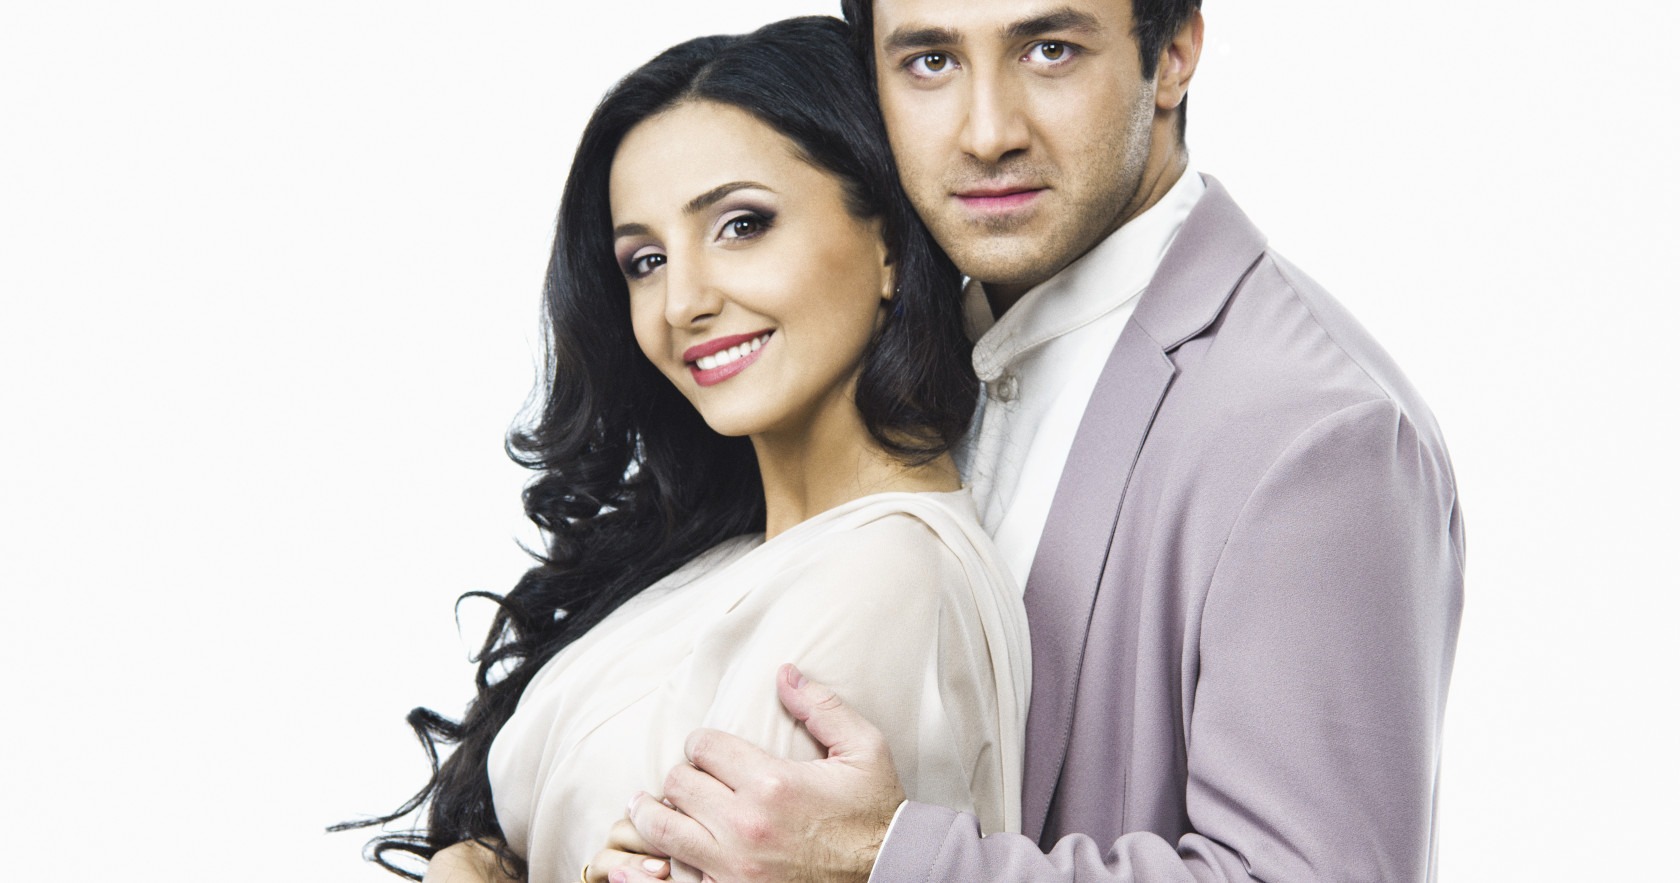 Gruzijos daina 2013: Nodi Tatishvili & Sophie Gelovani - Waterfall